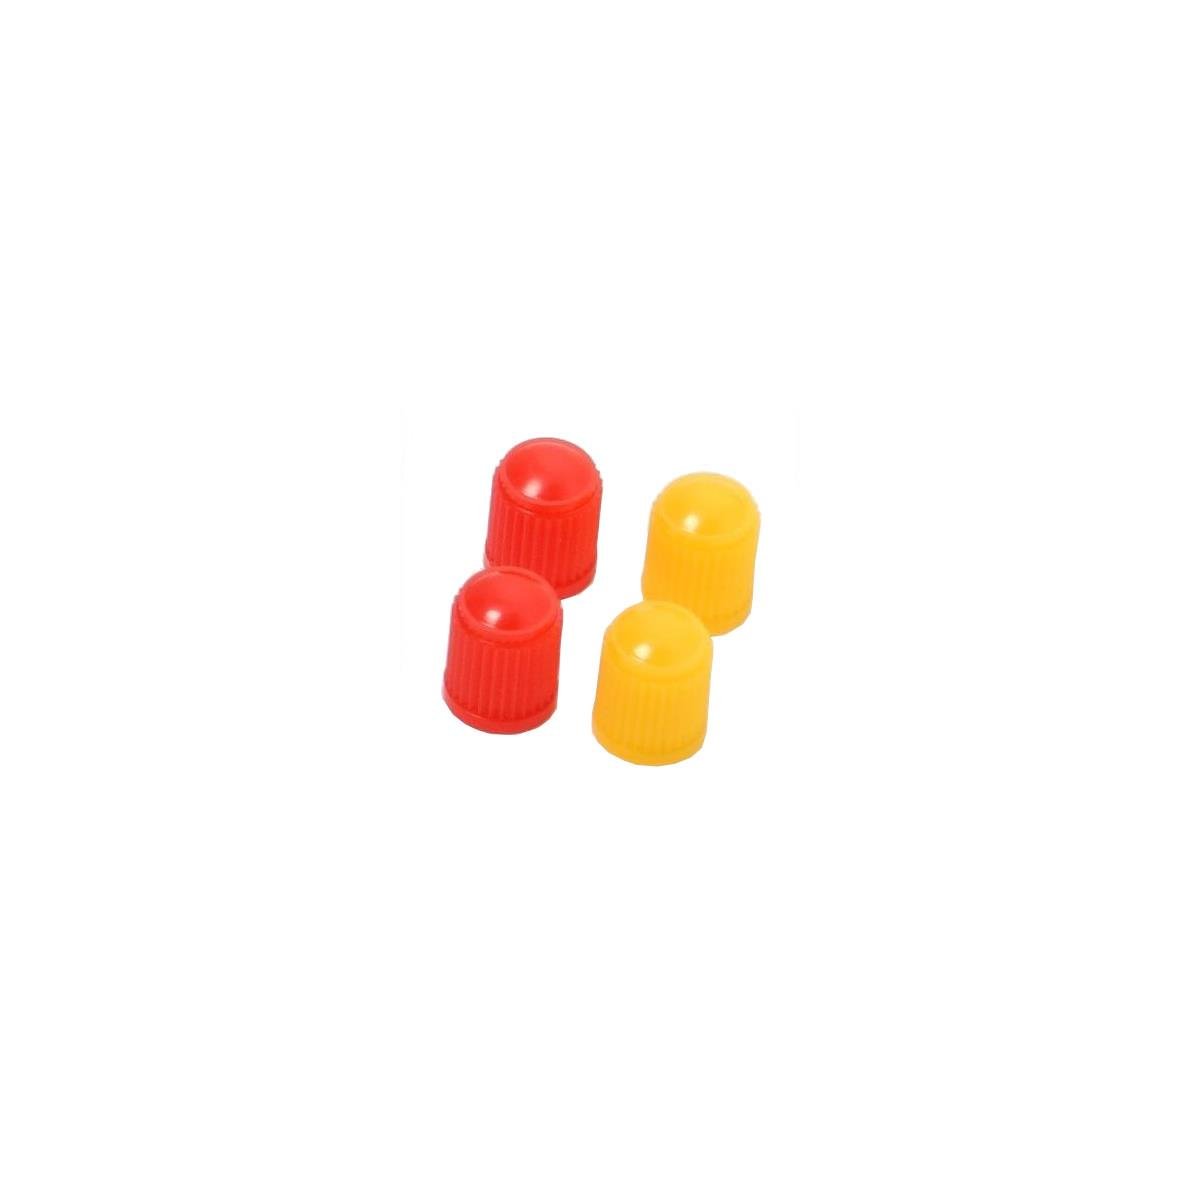 DRC Valve Caps  Red/Yellow, 4 pieces, Plastic